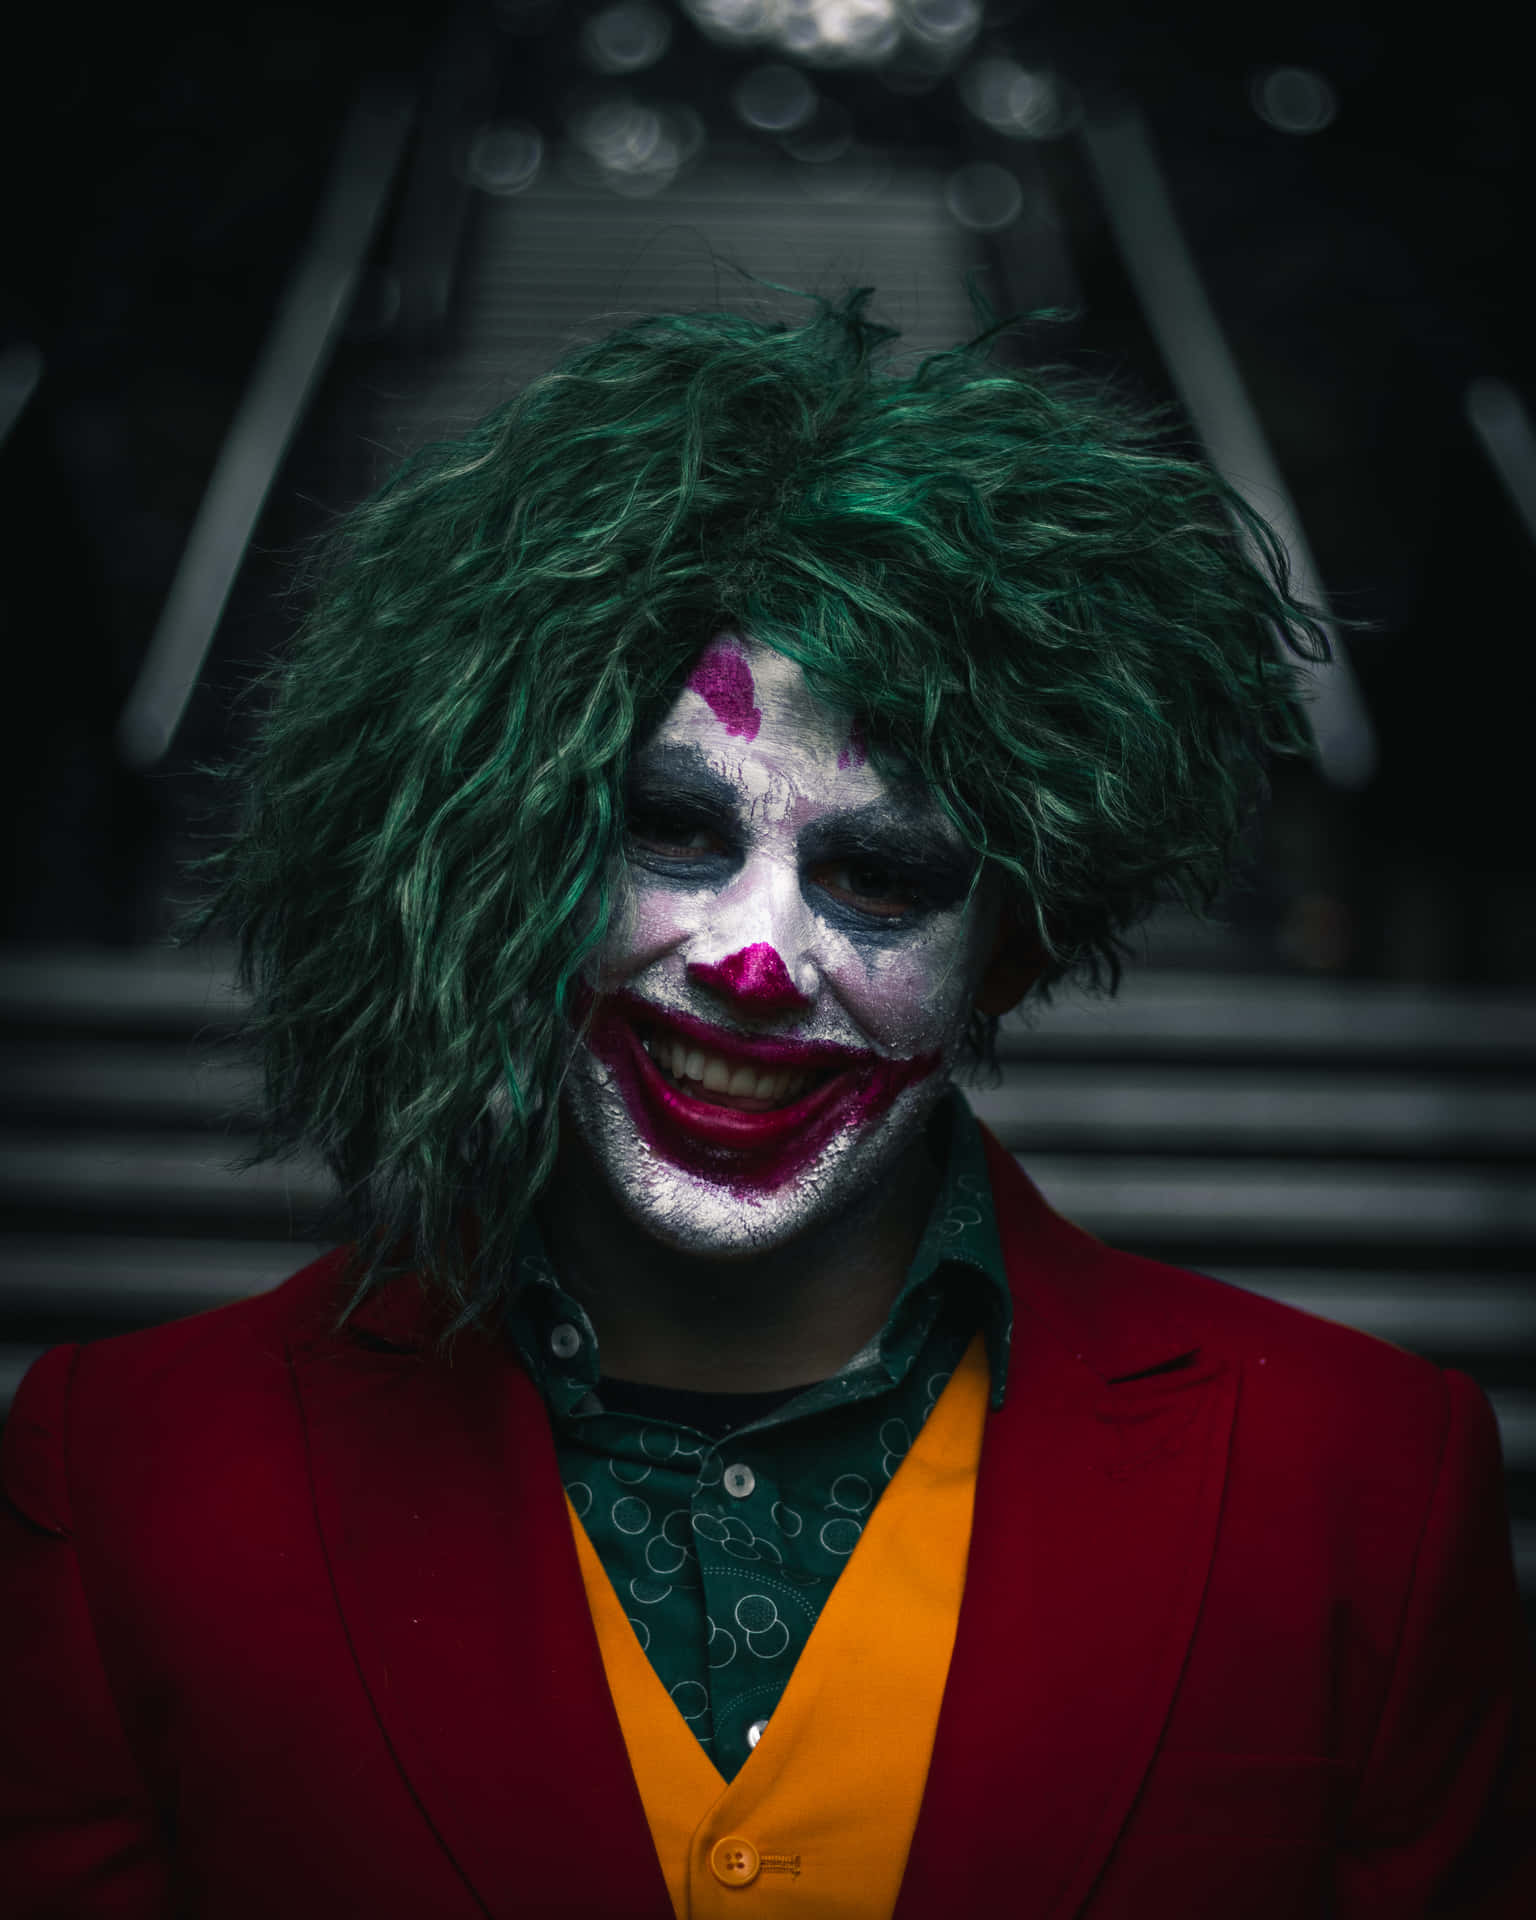 Bildskrattande Joker